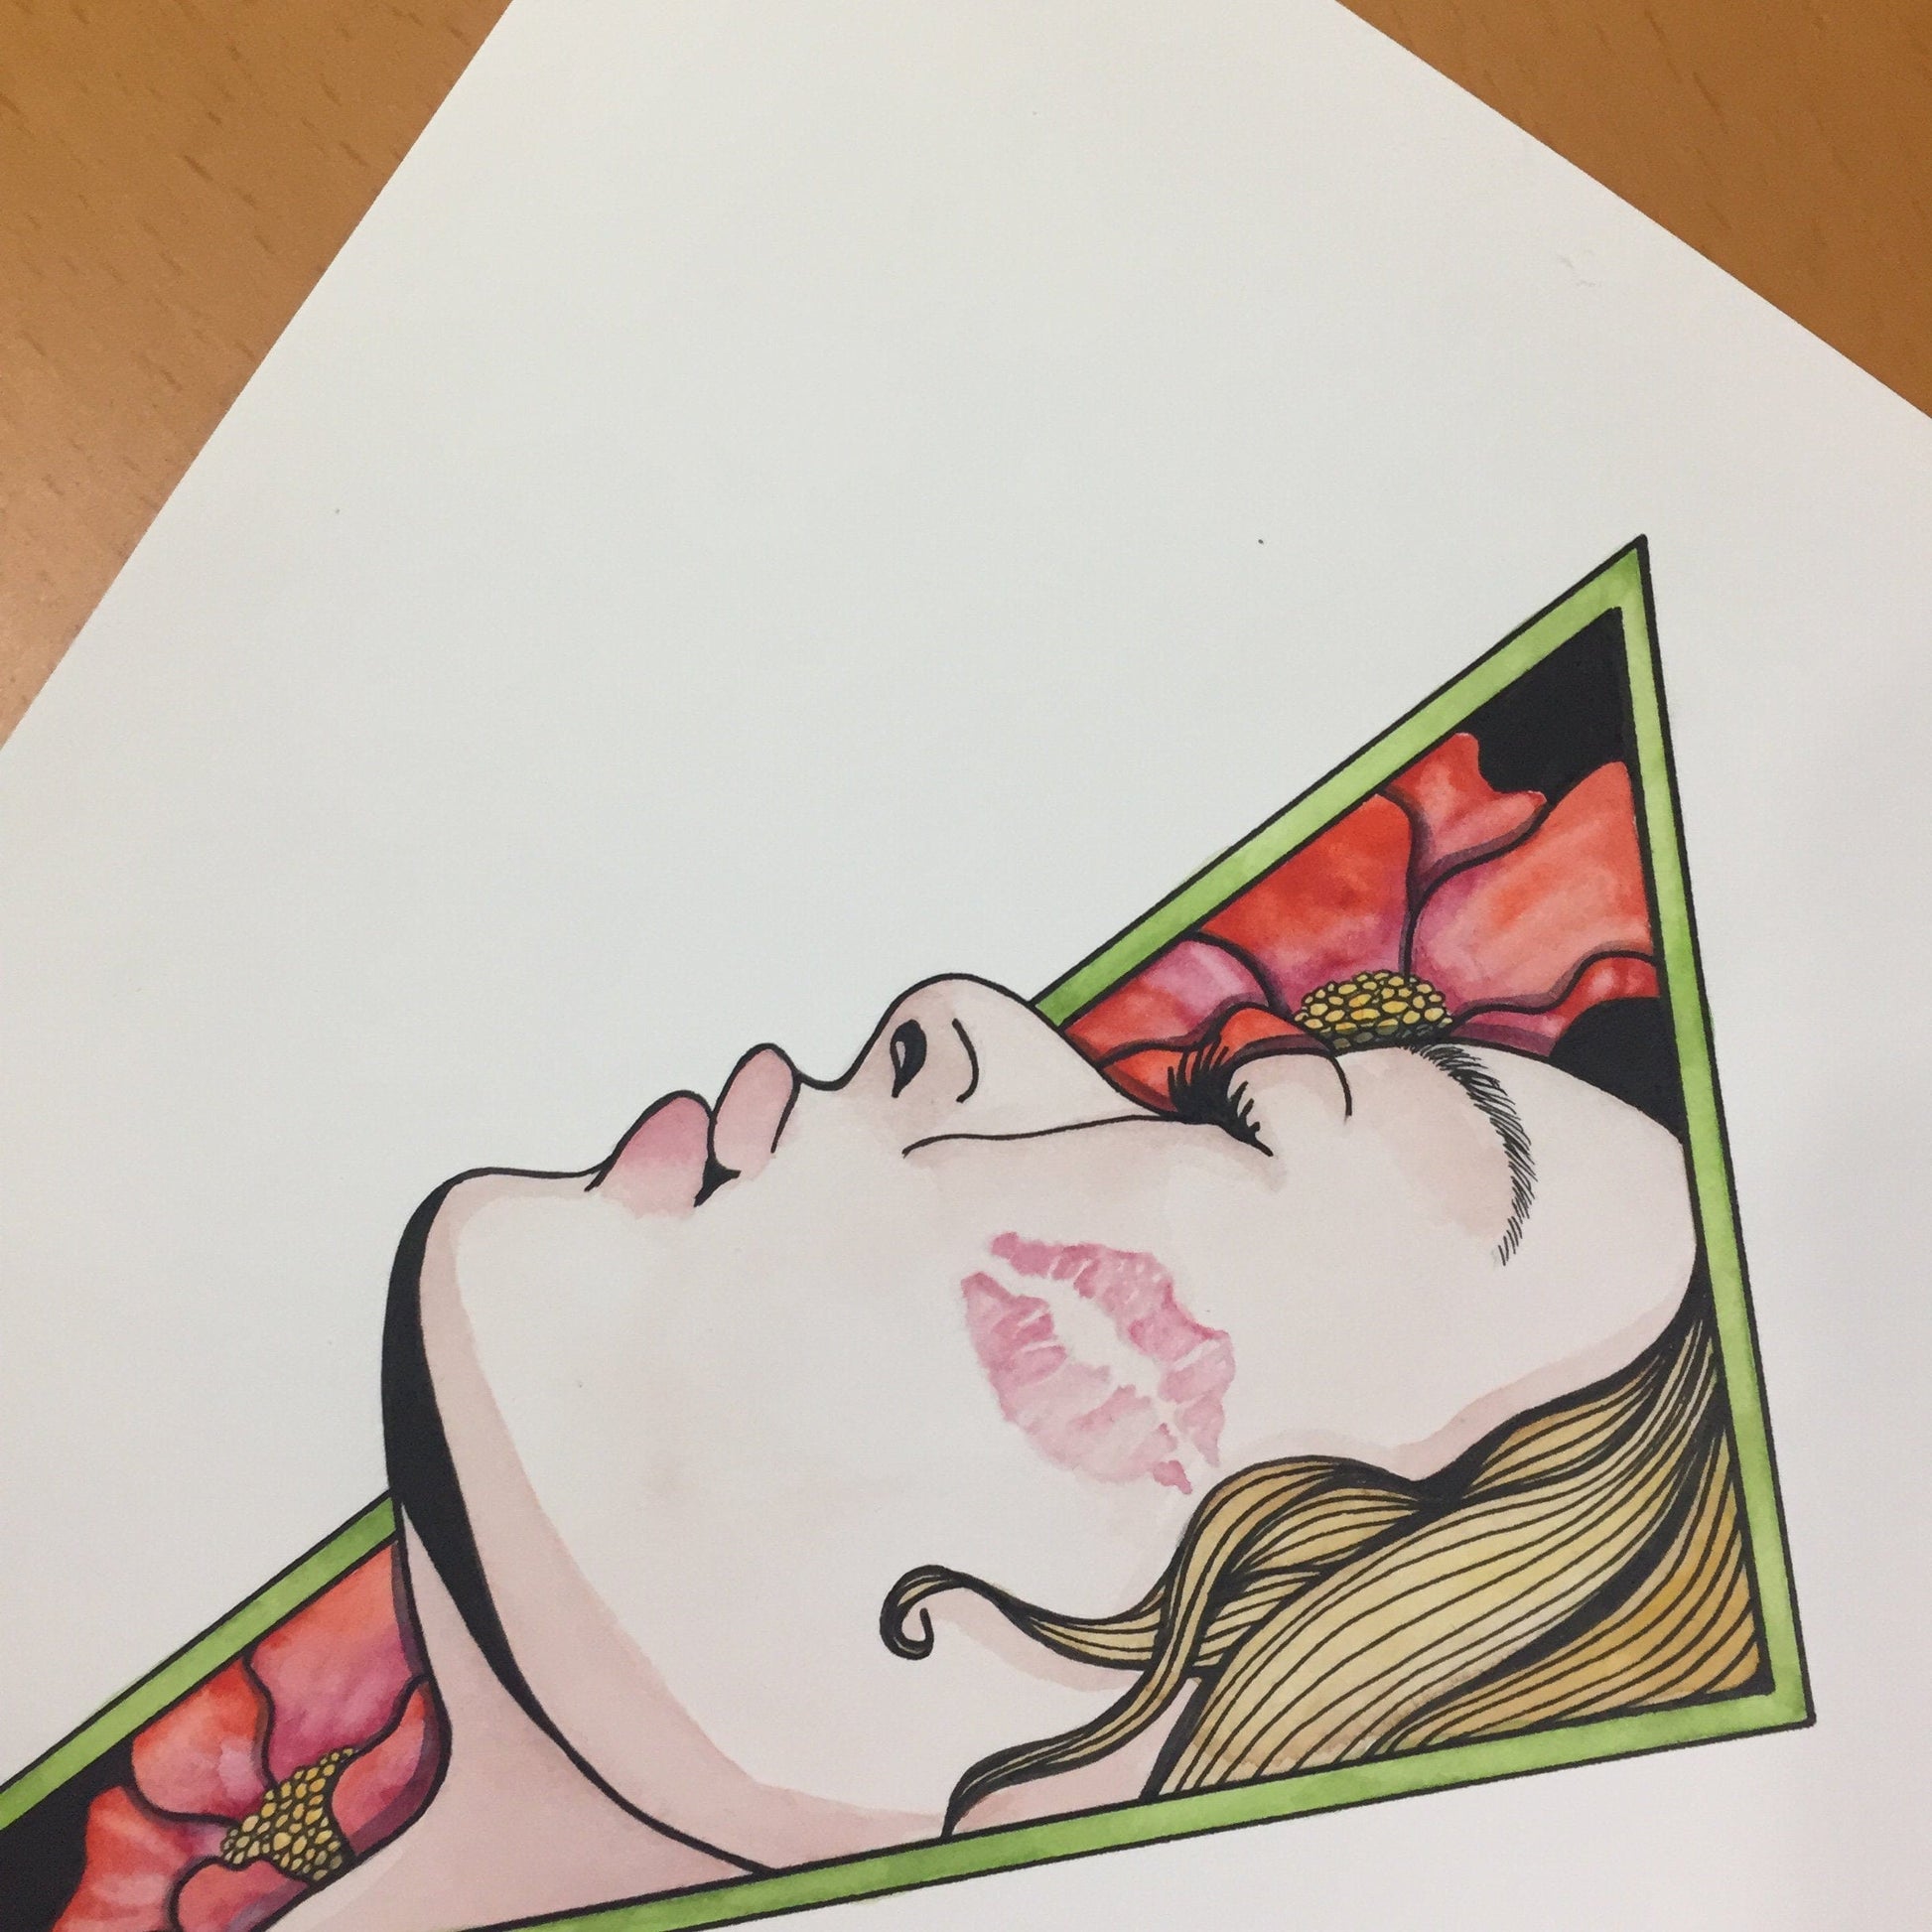 PinkPolish Design Original Art "The Kiss" Romance Inspired Original Watercolor & Ink Illustration